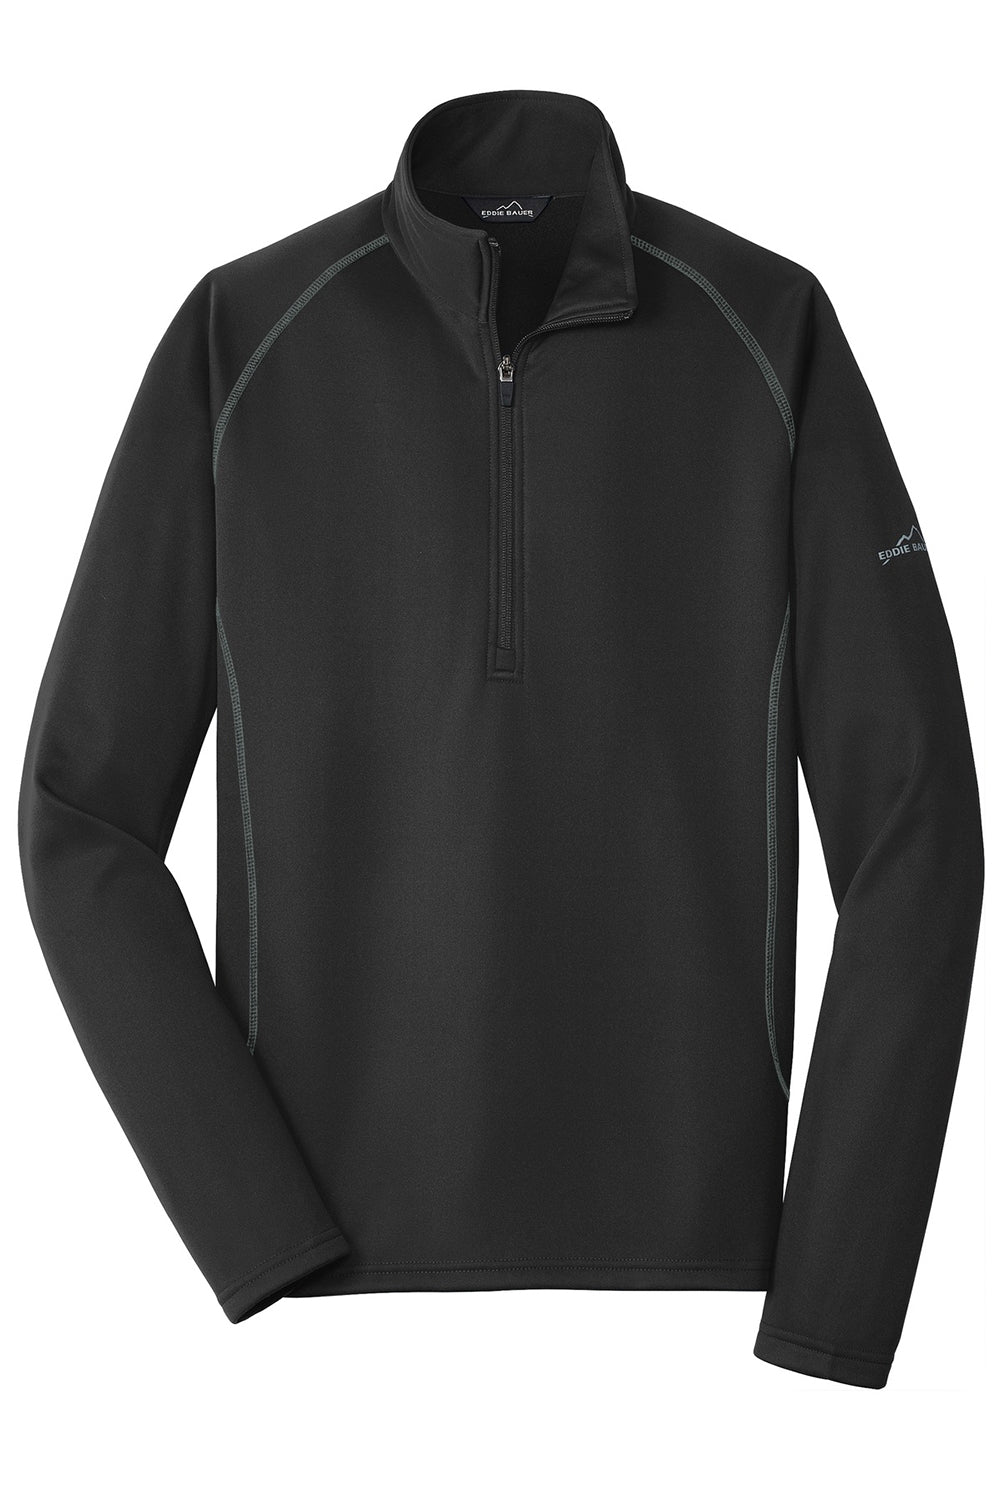 Eddie Bauer EB236 Mens Smooth Fleece 1/4 Zip Sweatshirt Black Flat Front